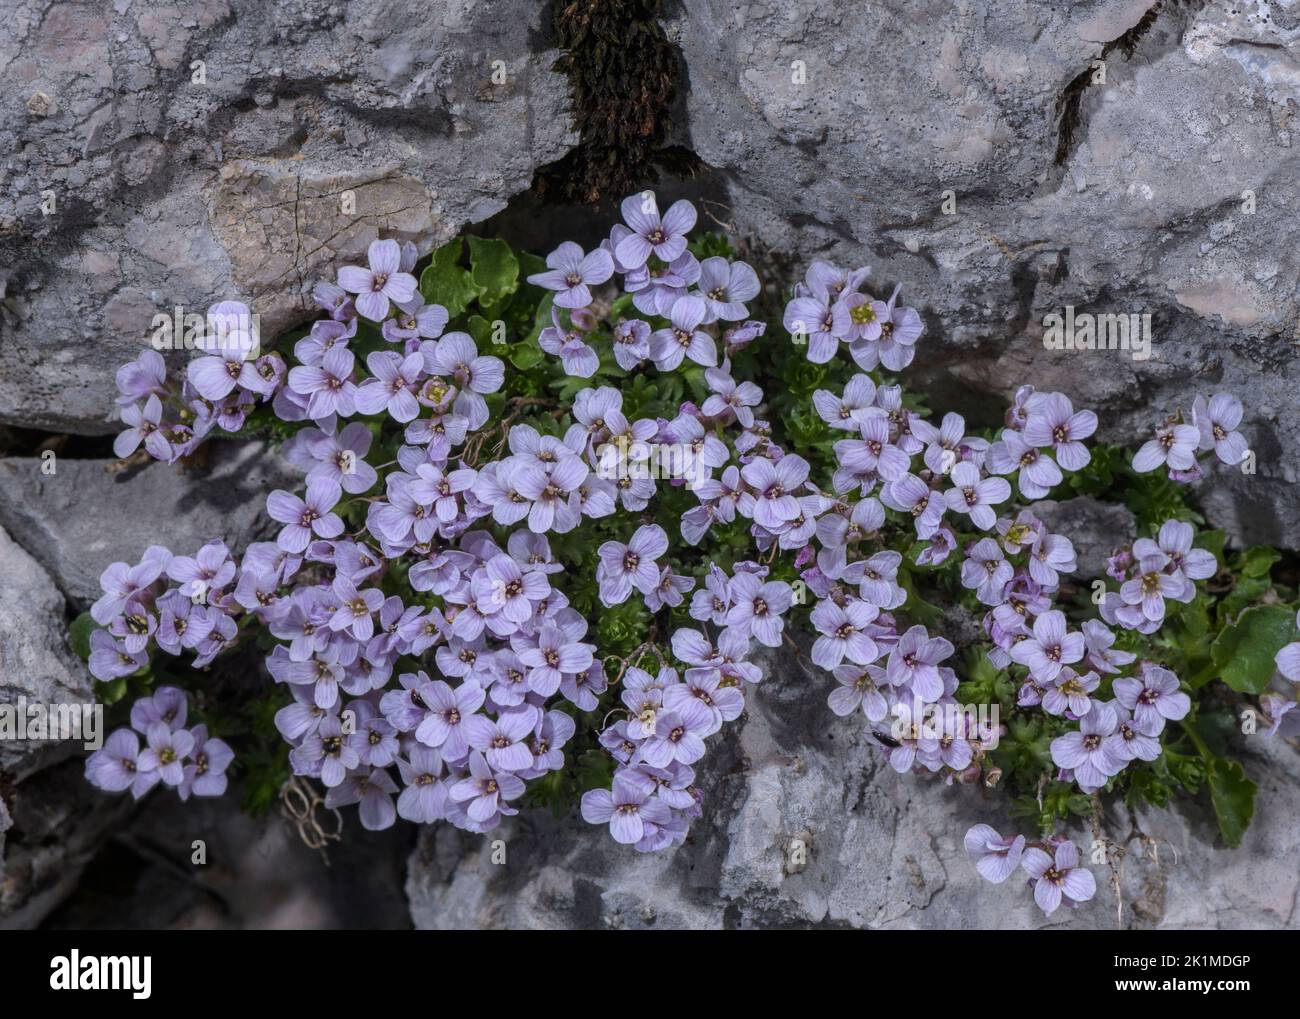 Pyrenean Whitlow Grass, Petrocallis pyrenaica in flower on limestone, Julian Alps. Stock Photo